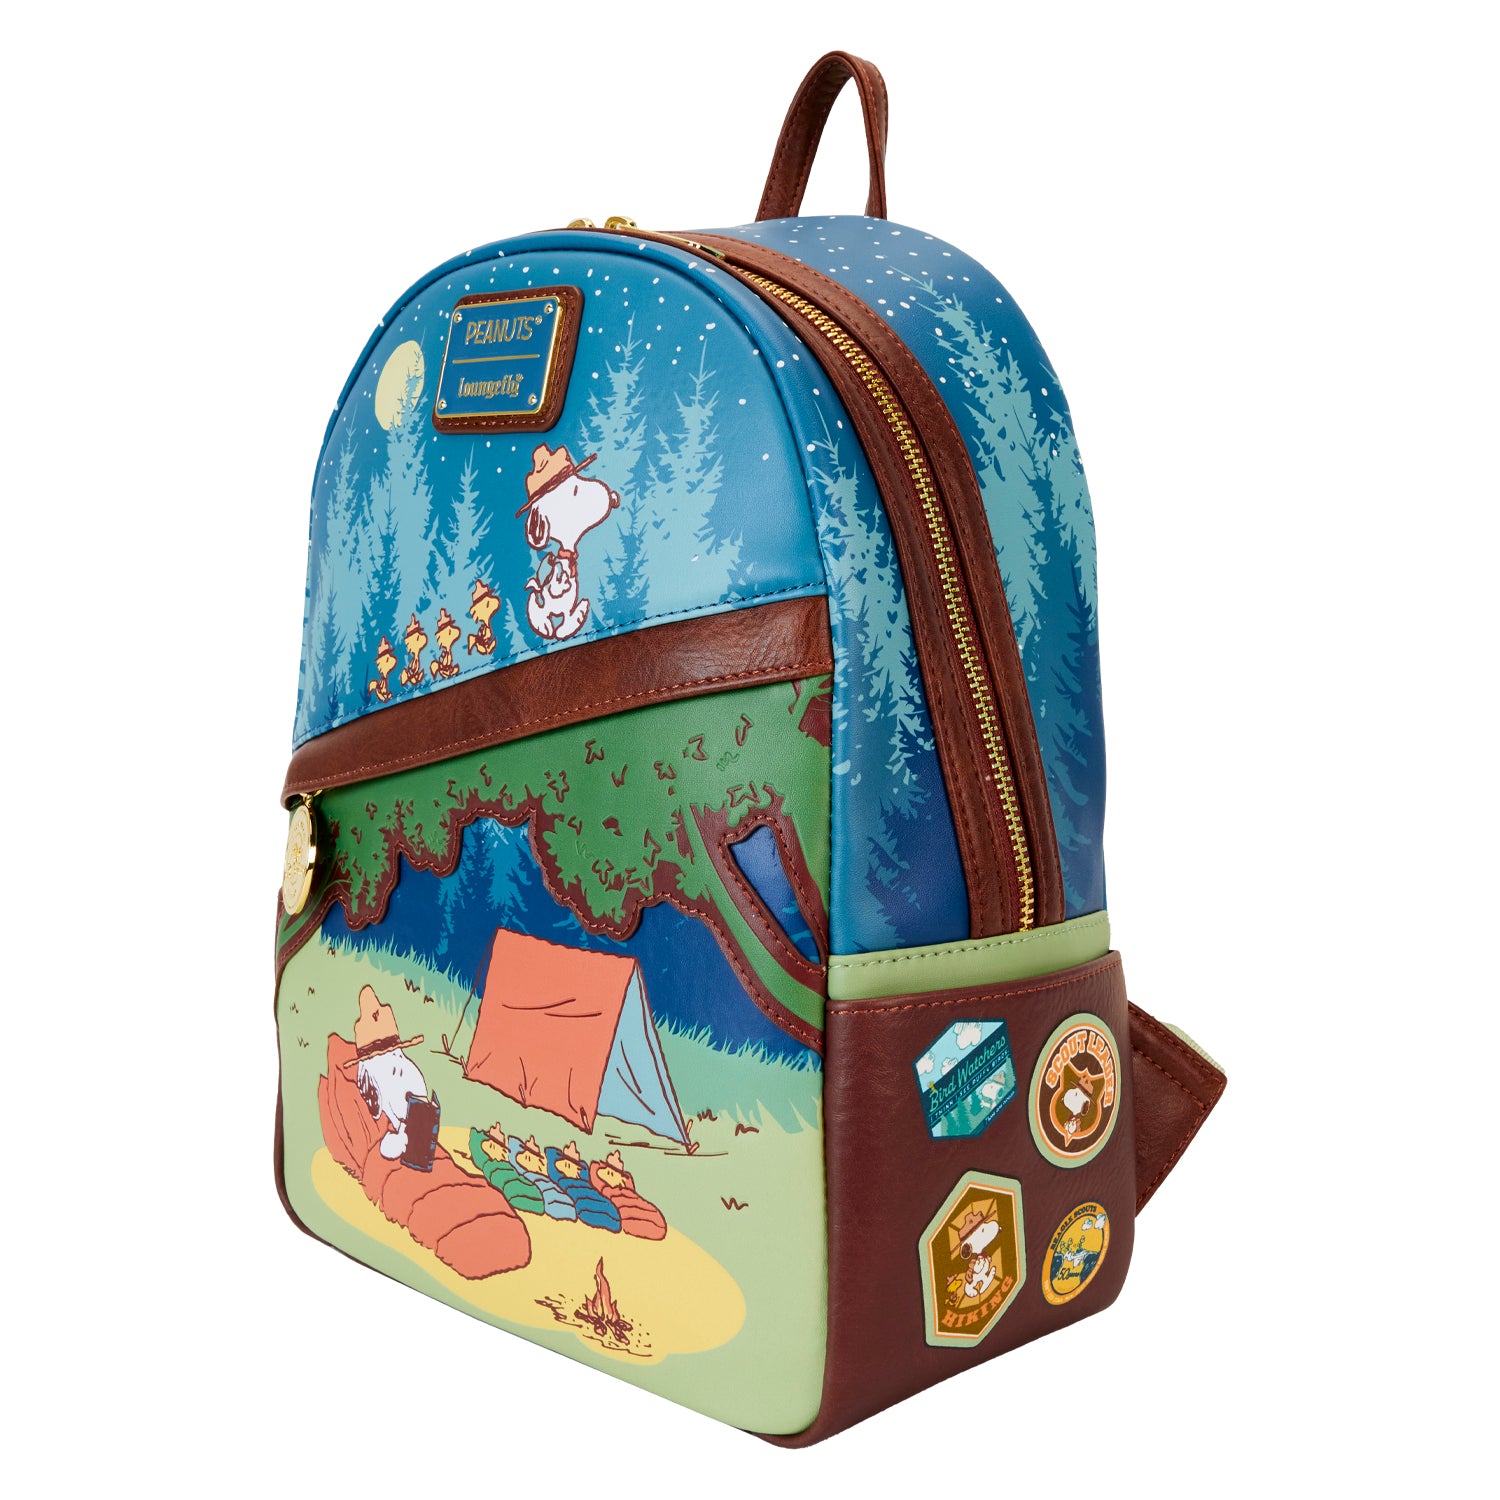 Peanuts | Beagle Scouts 50th Anniversary Mini Backpack